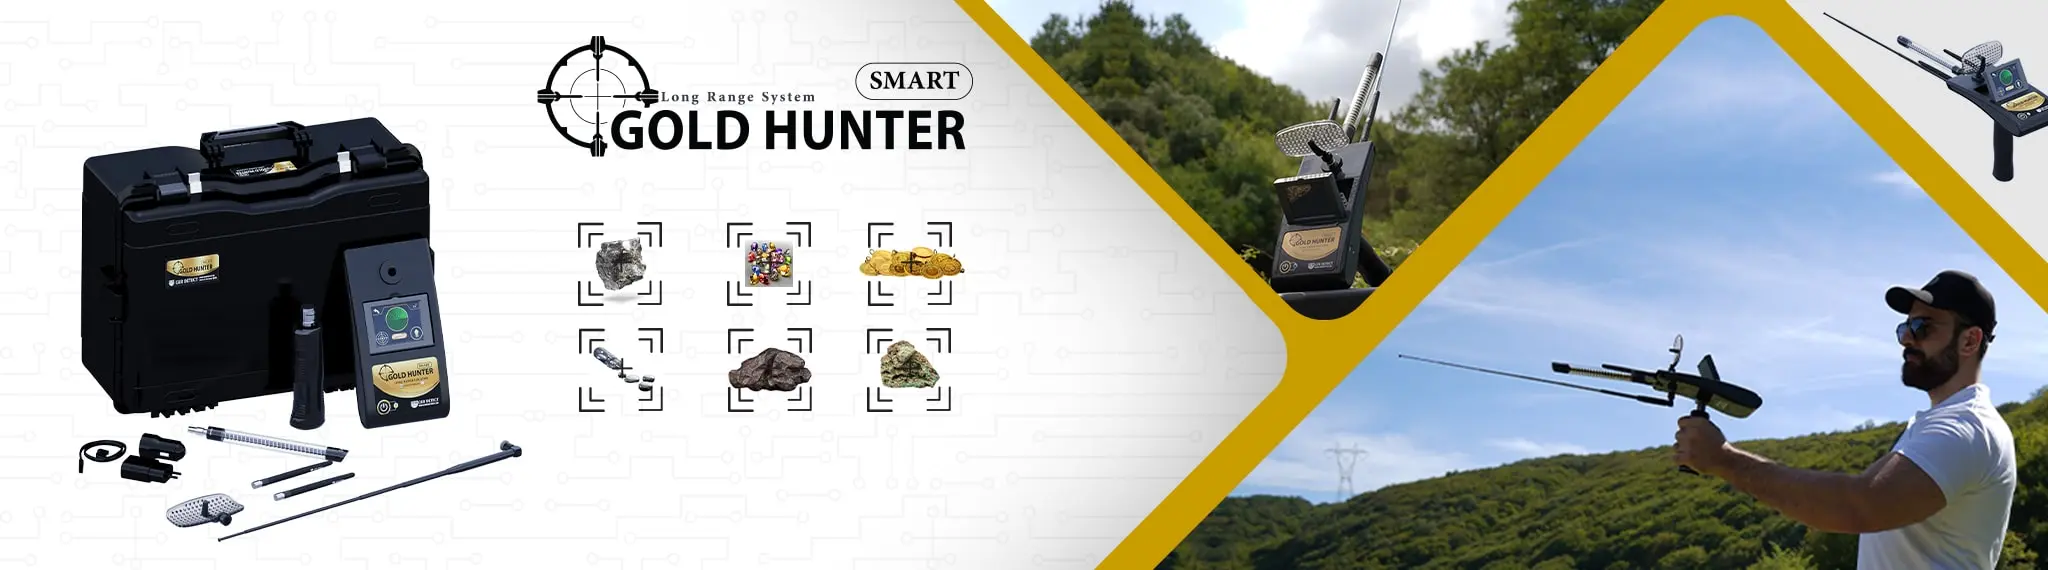 Gold Hunter Smart Detector